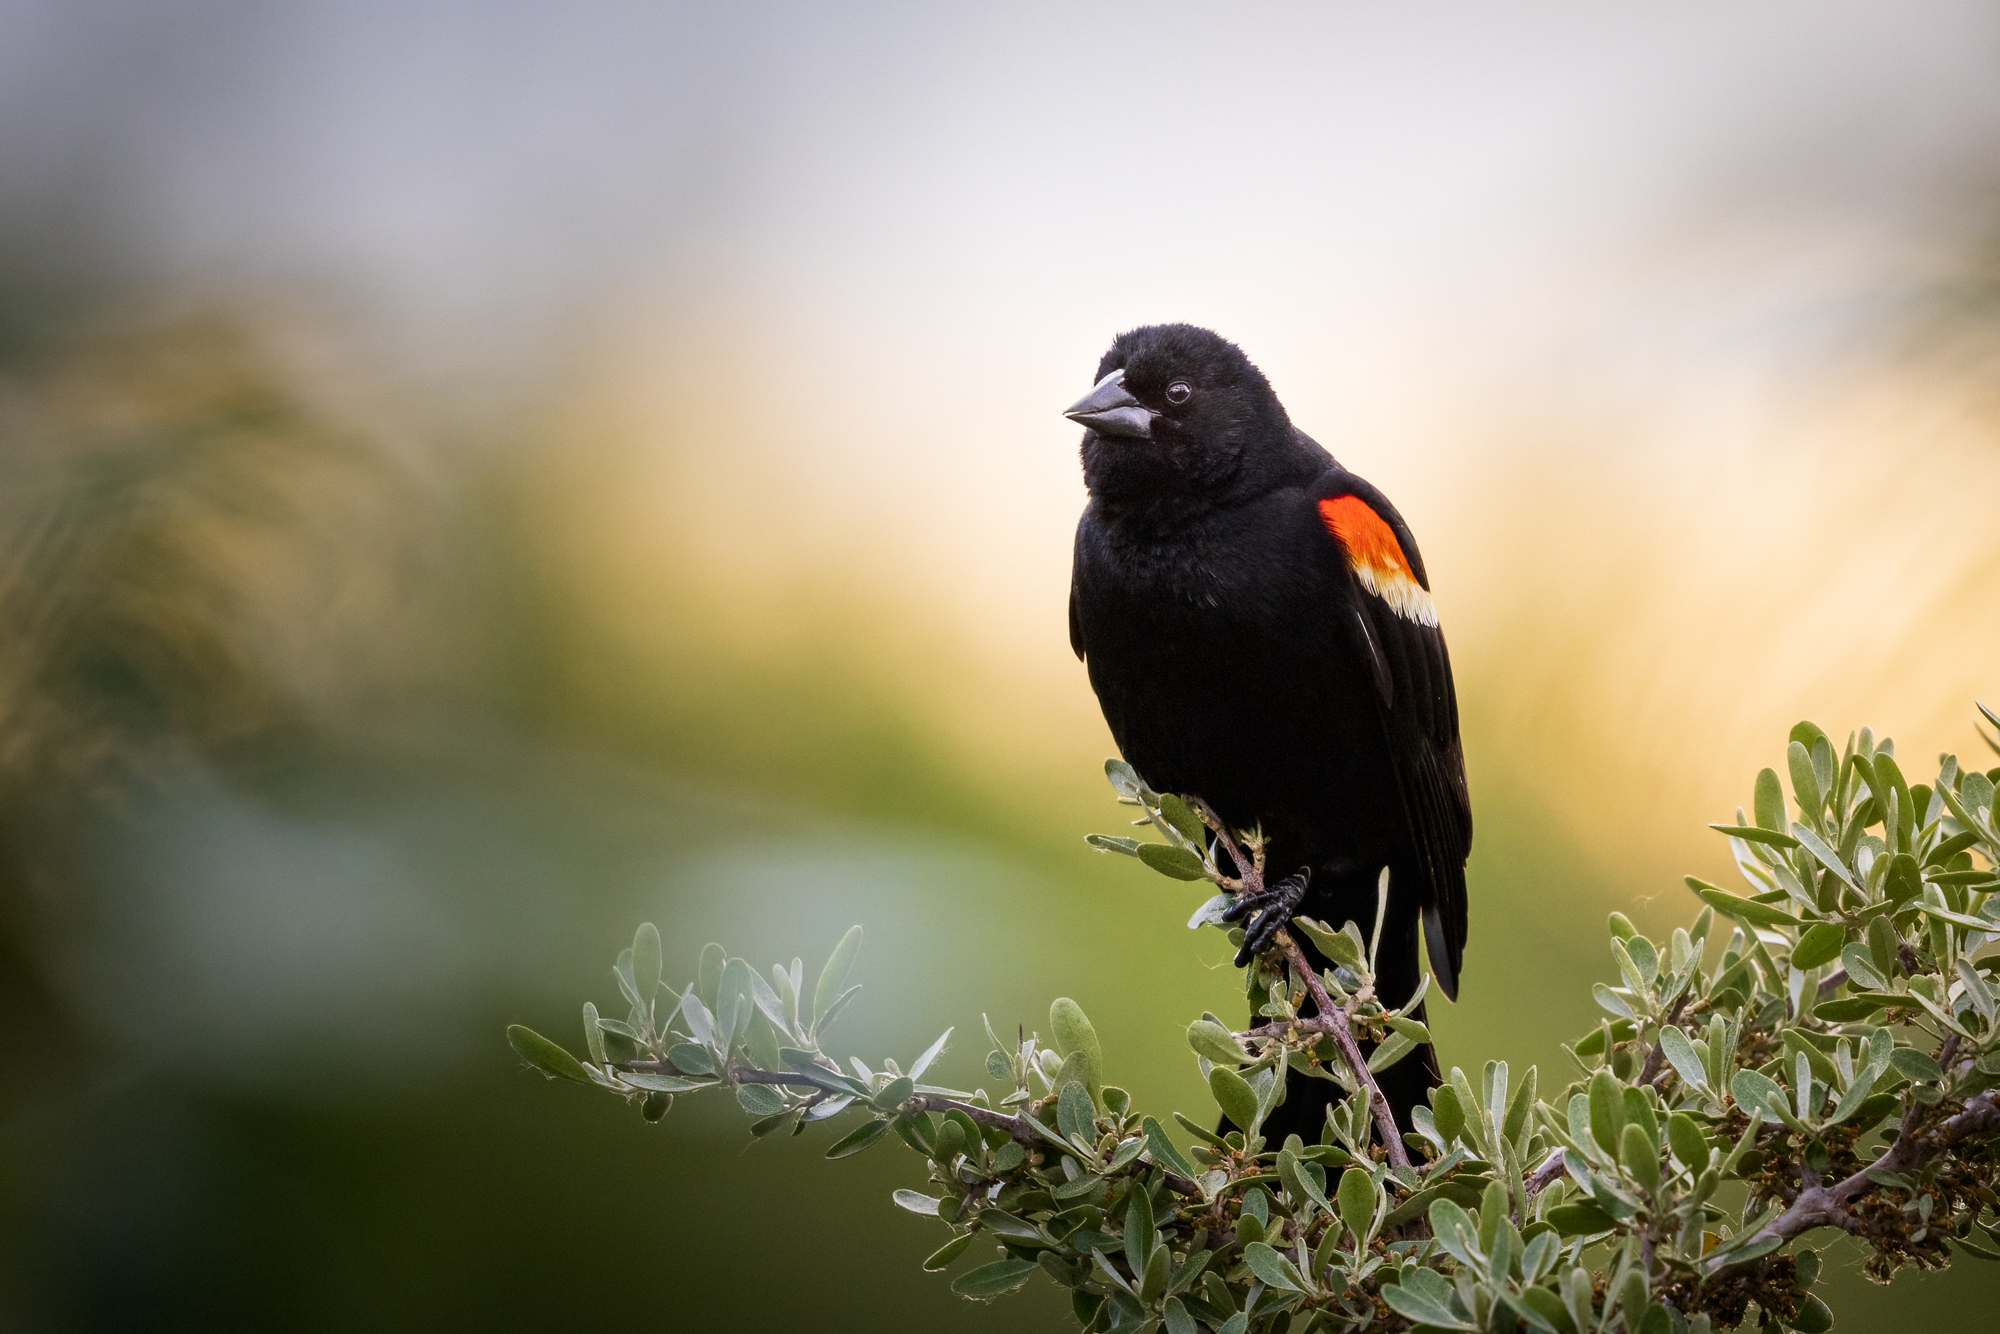 Red-winged Blackbird sitting on a shrub